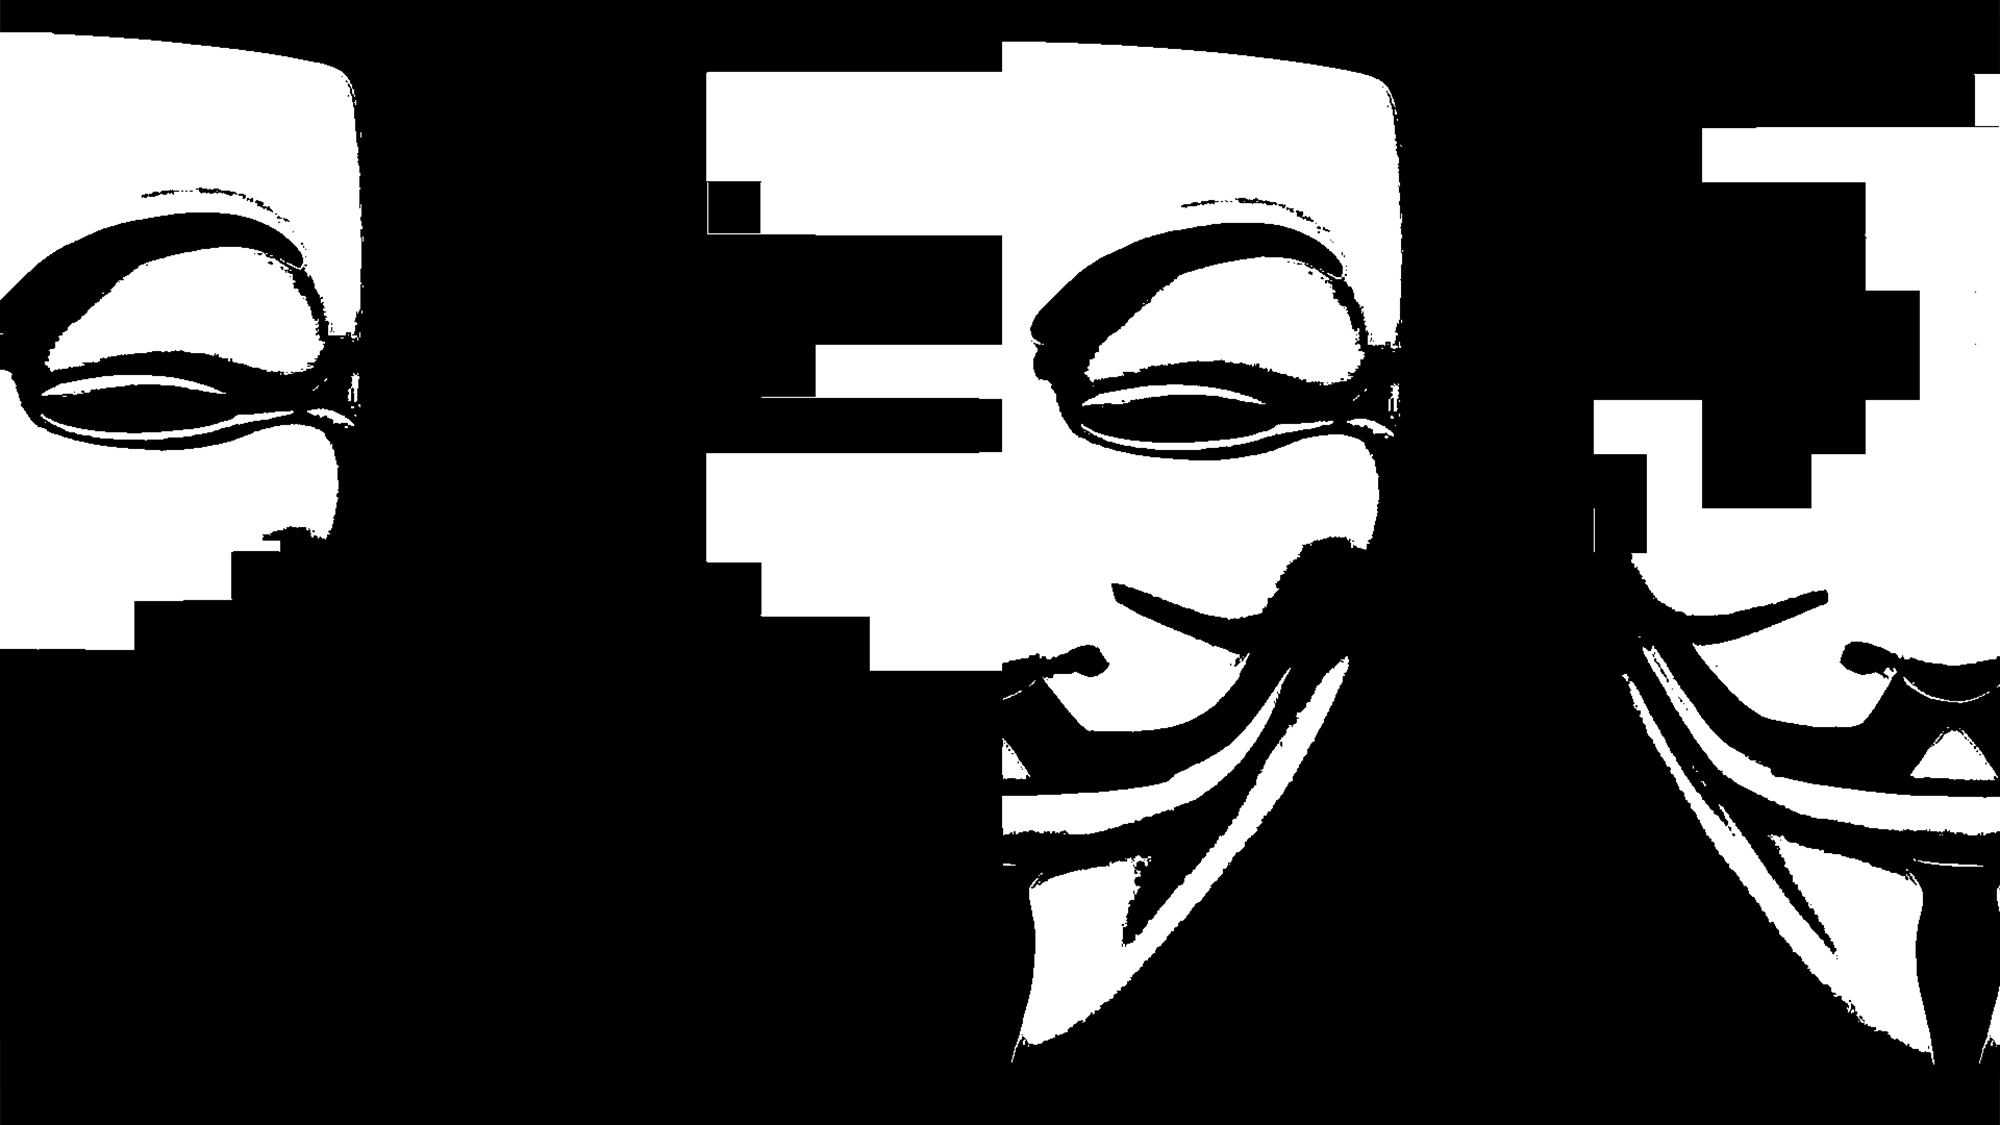 The Hacker Group Anonymous Returns The Atlantic - roblox cbro type discord and roblox rayinfinitum